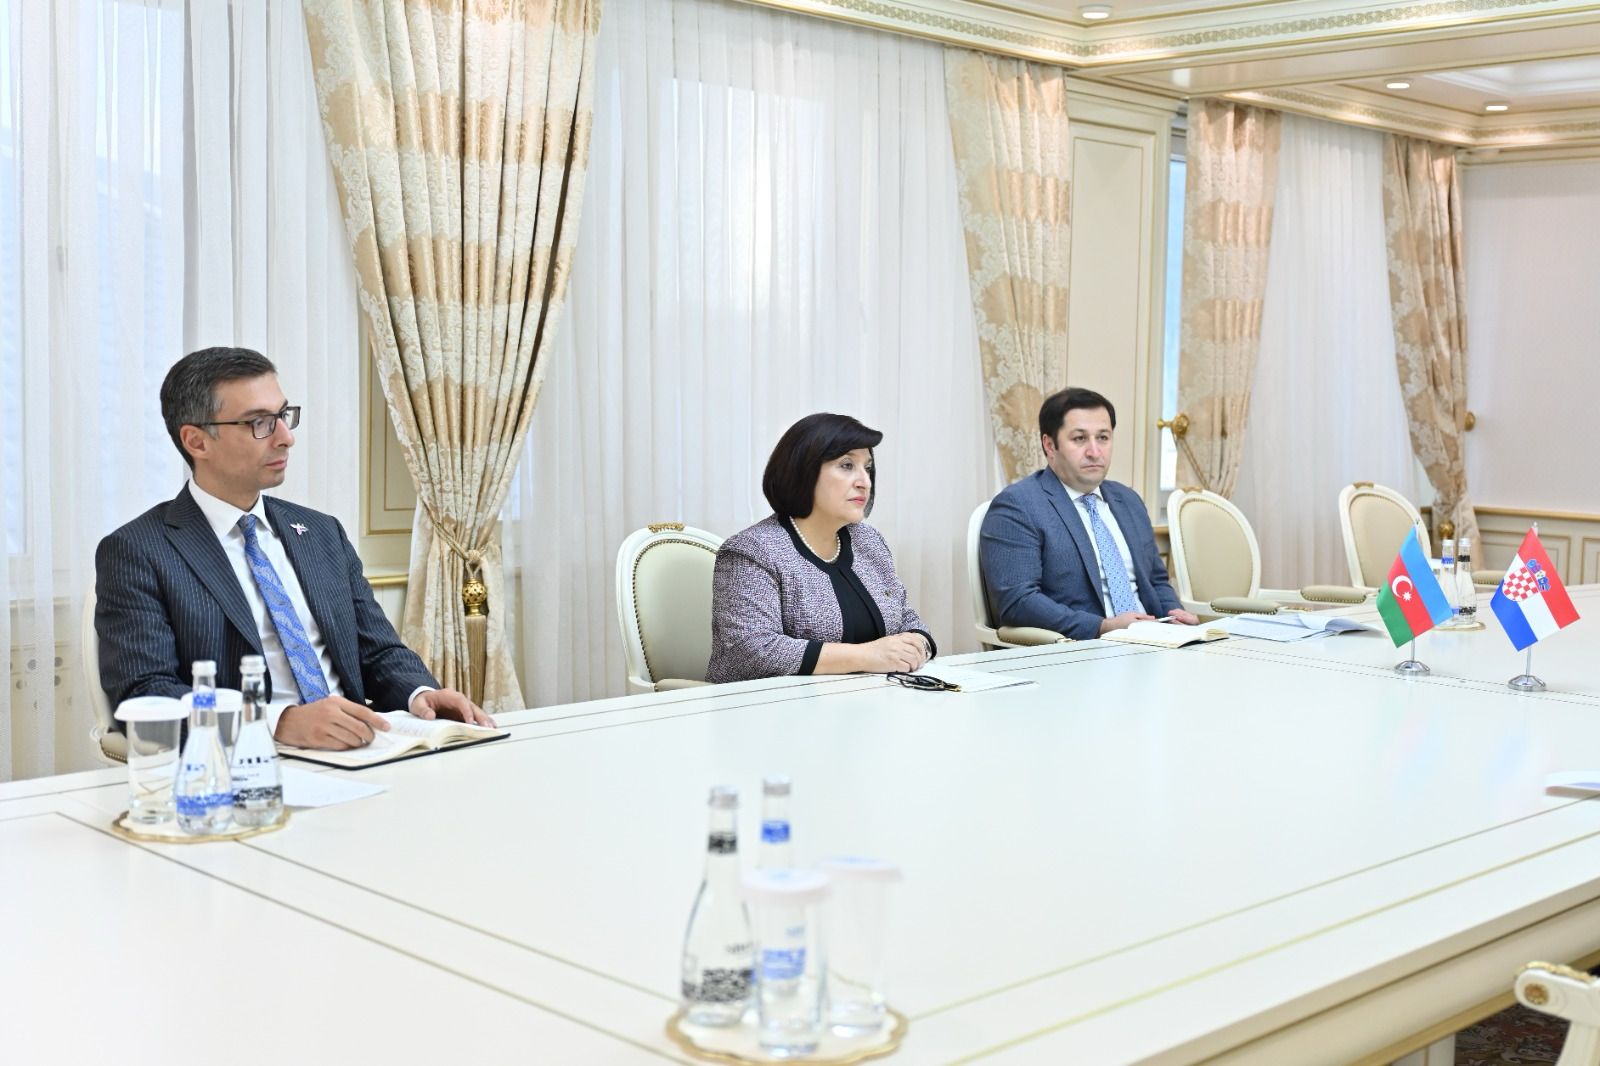 Speaker of Milli Majlis Sahiba Gafarova Meets with Ambassadors of Hashemite Kingdom of Jordan, Croatia and Greece